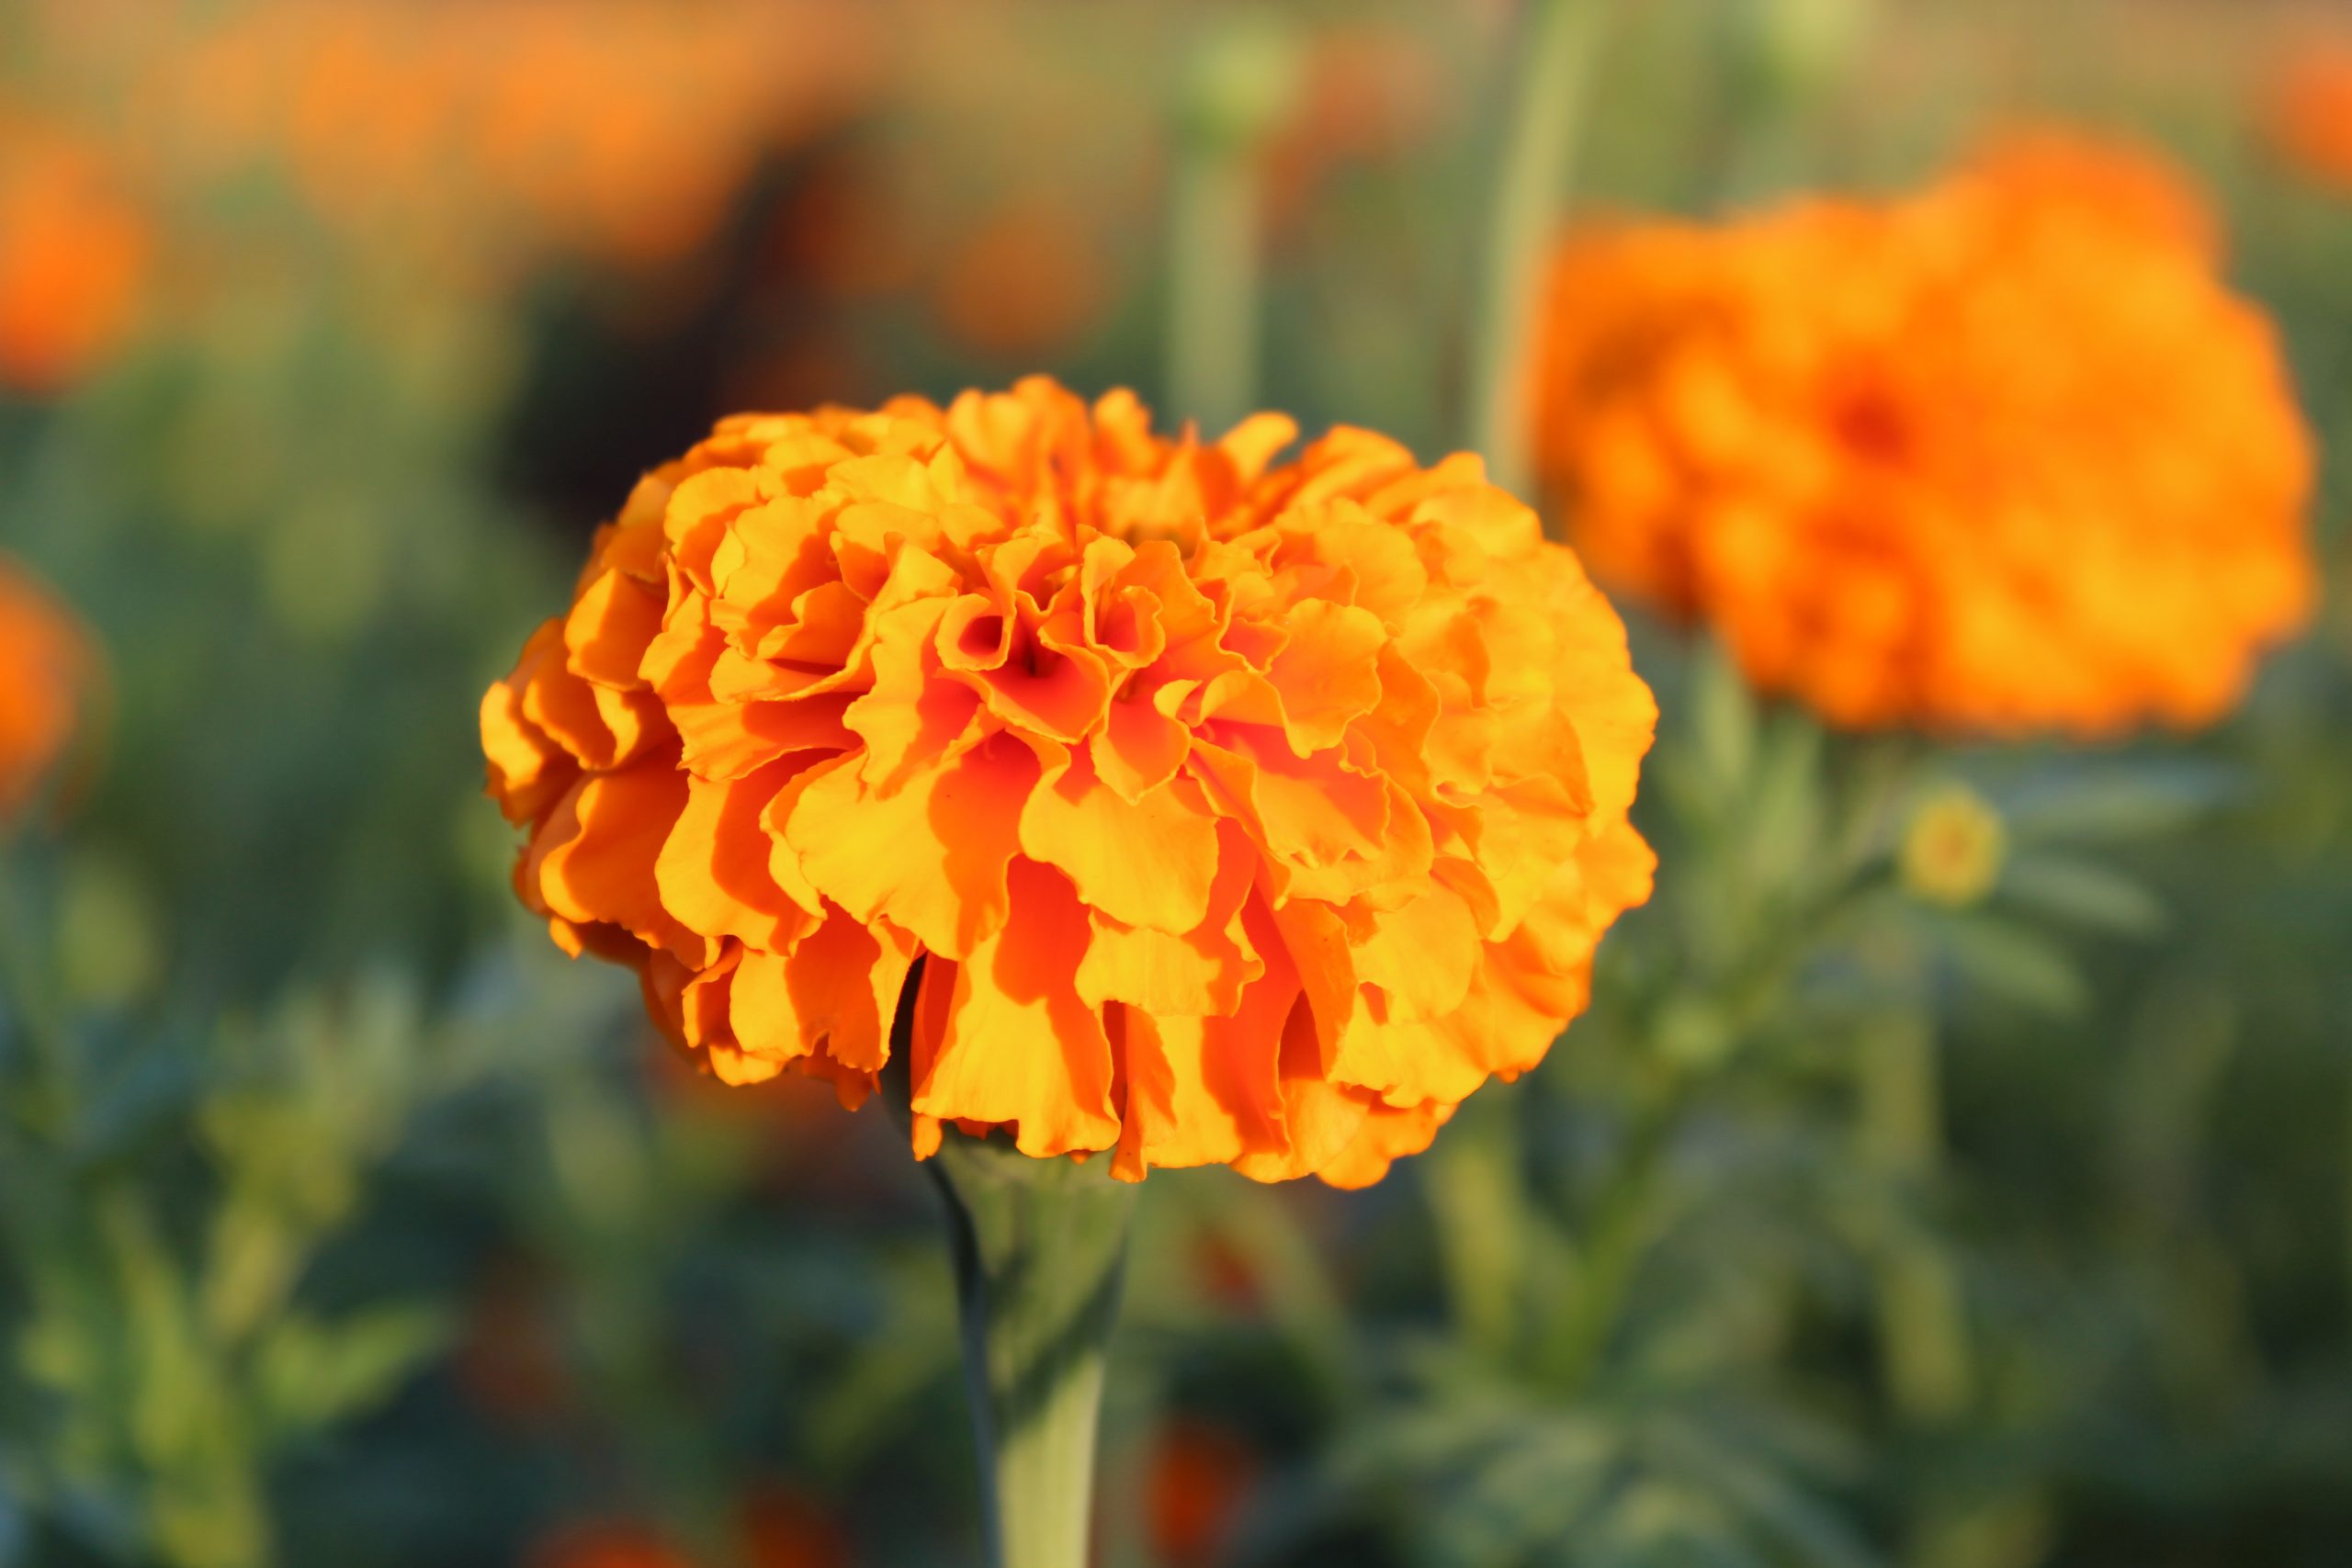 Marigold in full bloom